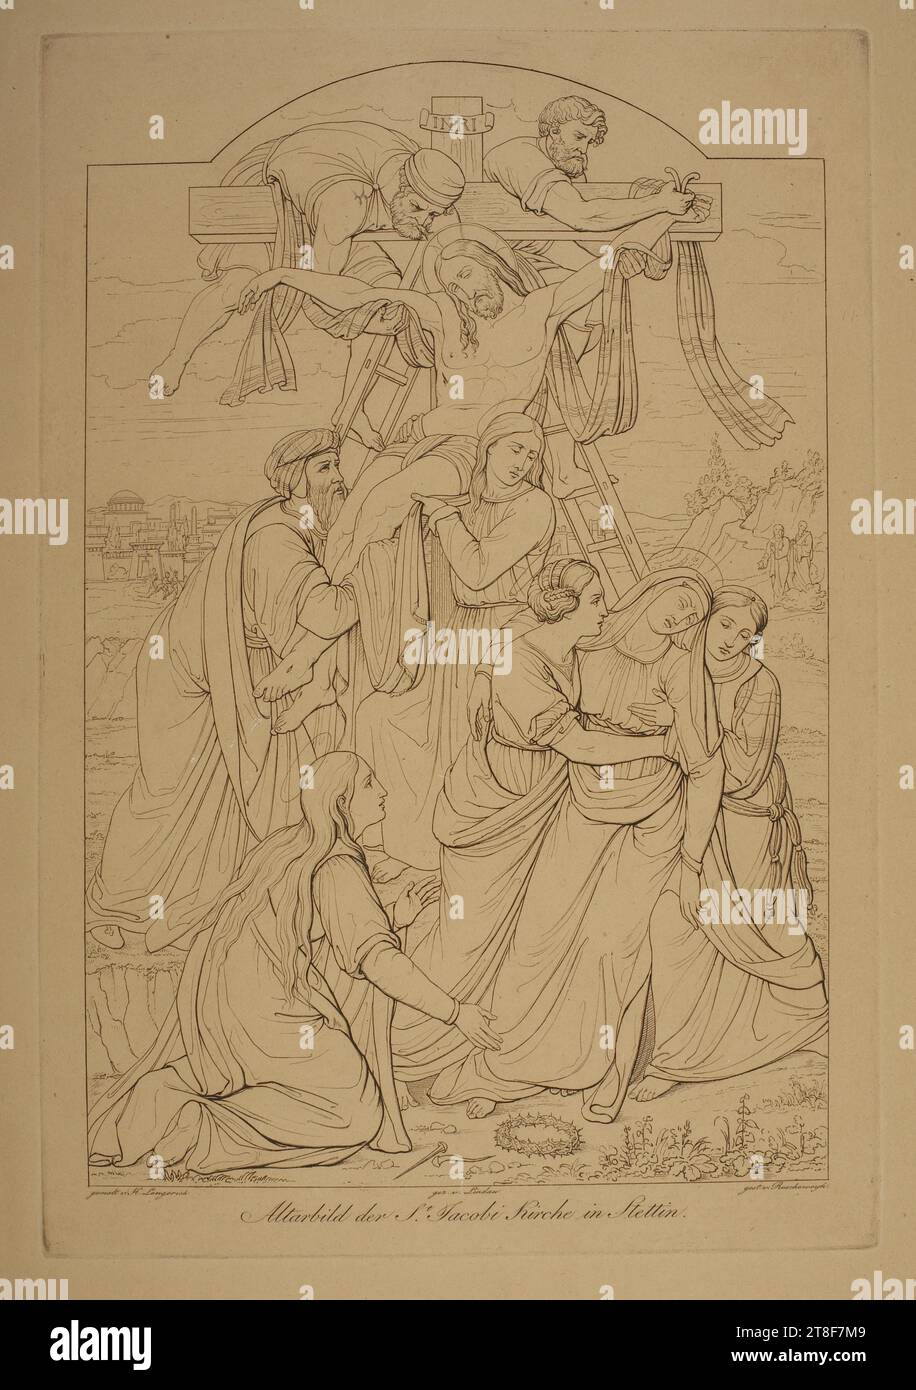 Descent from the Cross, Ferdinand Ruscheweyh, 1785-1846, No later than 1846, Graphic Art, Etching, Paper, Color, Printer's ink, Etching, Printet, Height (plate size) 335 mm, Height (paper size) 450 mm, Width (plate size) 230 mm, Width (paper size) 295 mm, gemalt v. H. Lengerich, gez. v. Lindau, gest. v. Ruscheweyh, Alterbild der S.t. Jacobi Kirche in Stettin., Graphic Design, European Stock Photo